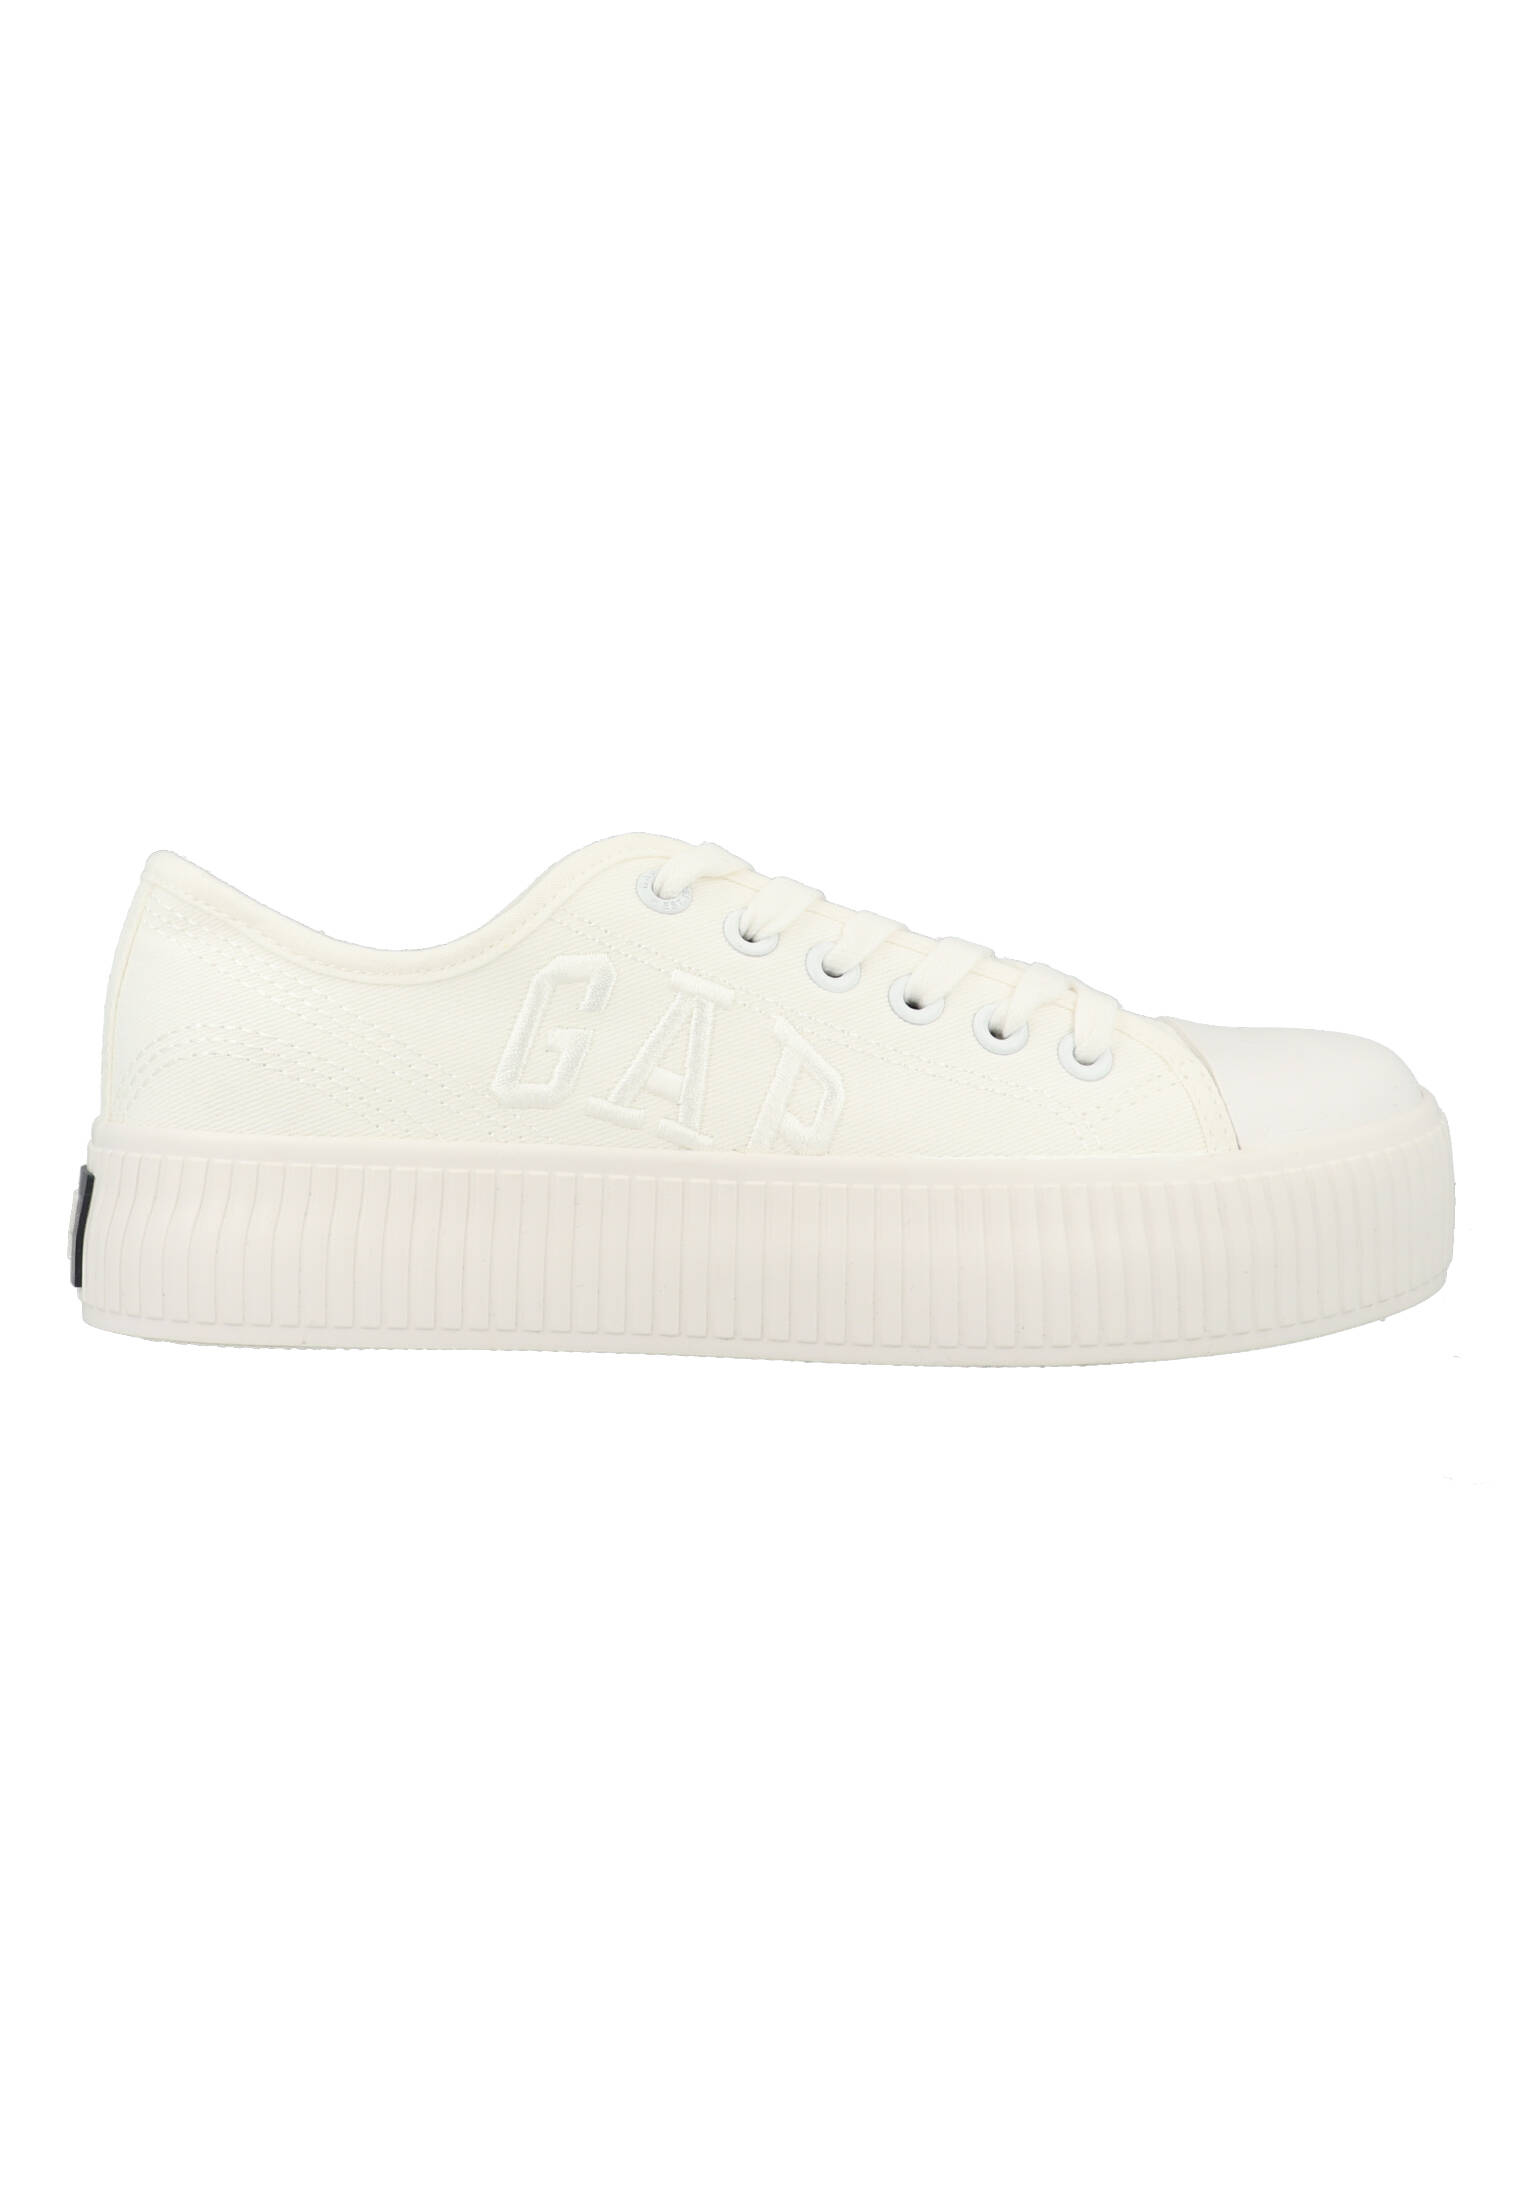 Gap - Sneaker - Female - White - 37 - Sneakers